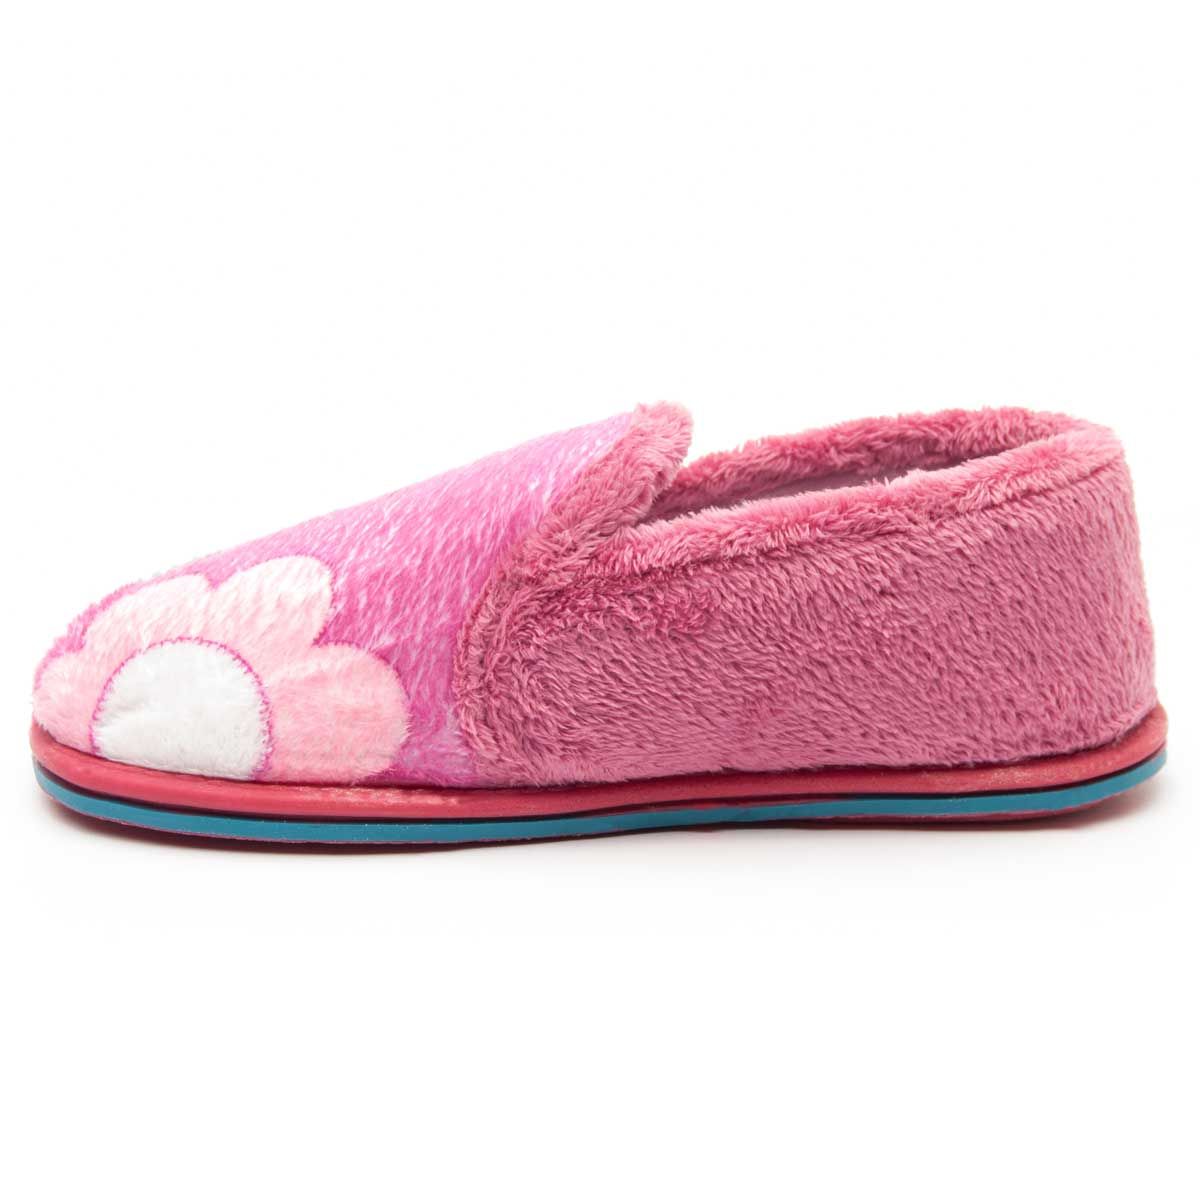 Montevita Comfortable Slipper in Pink